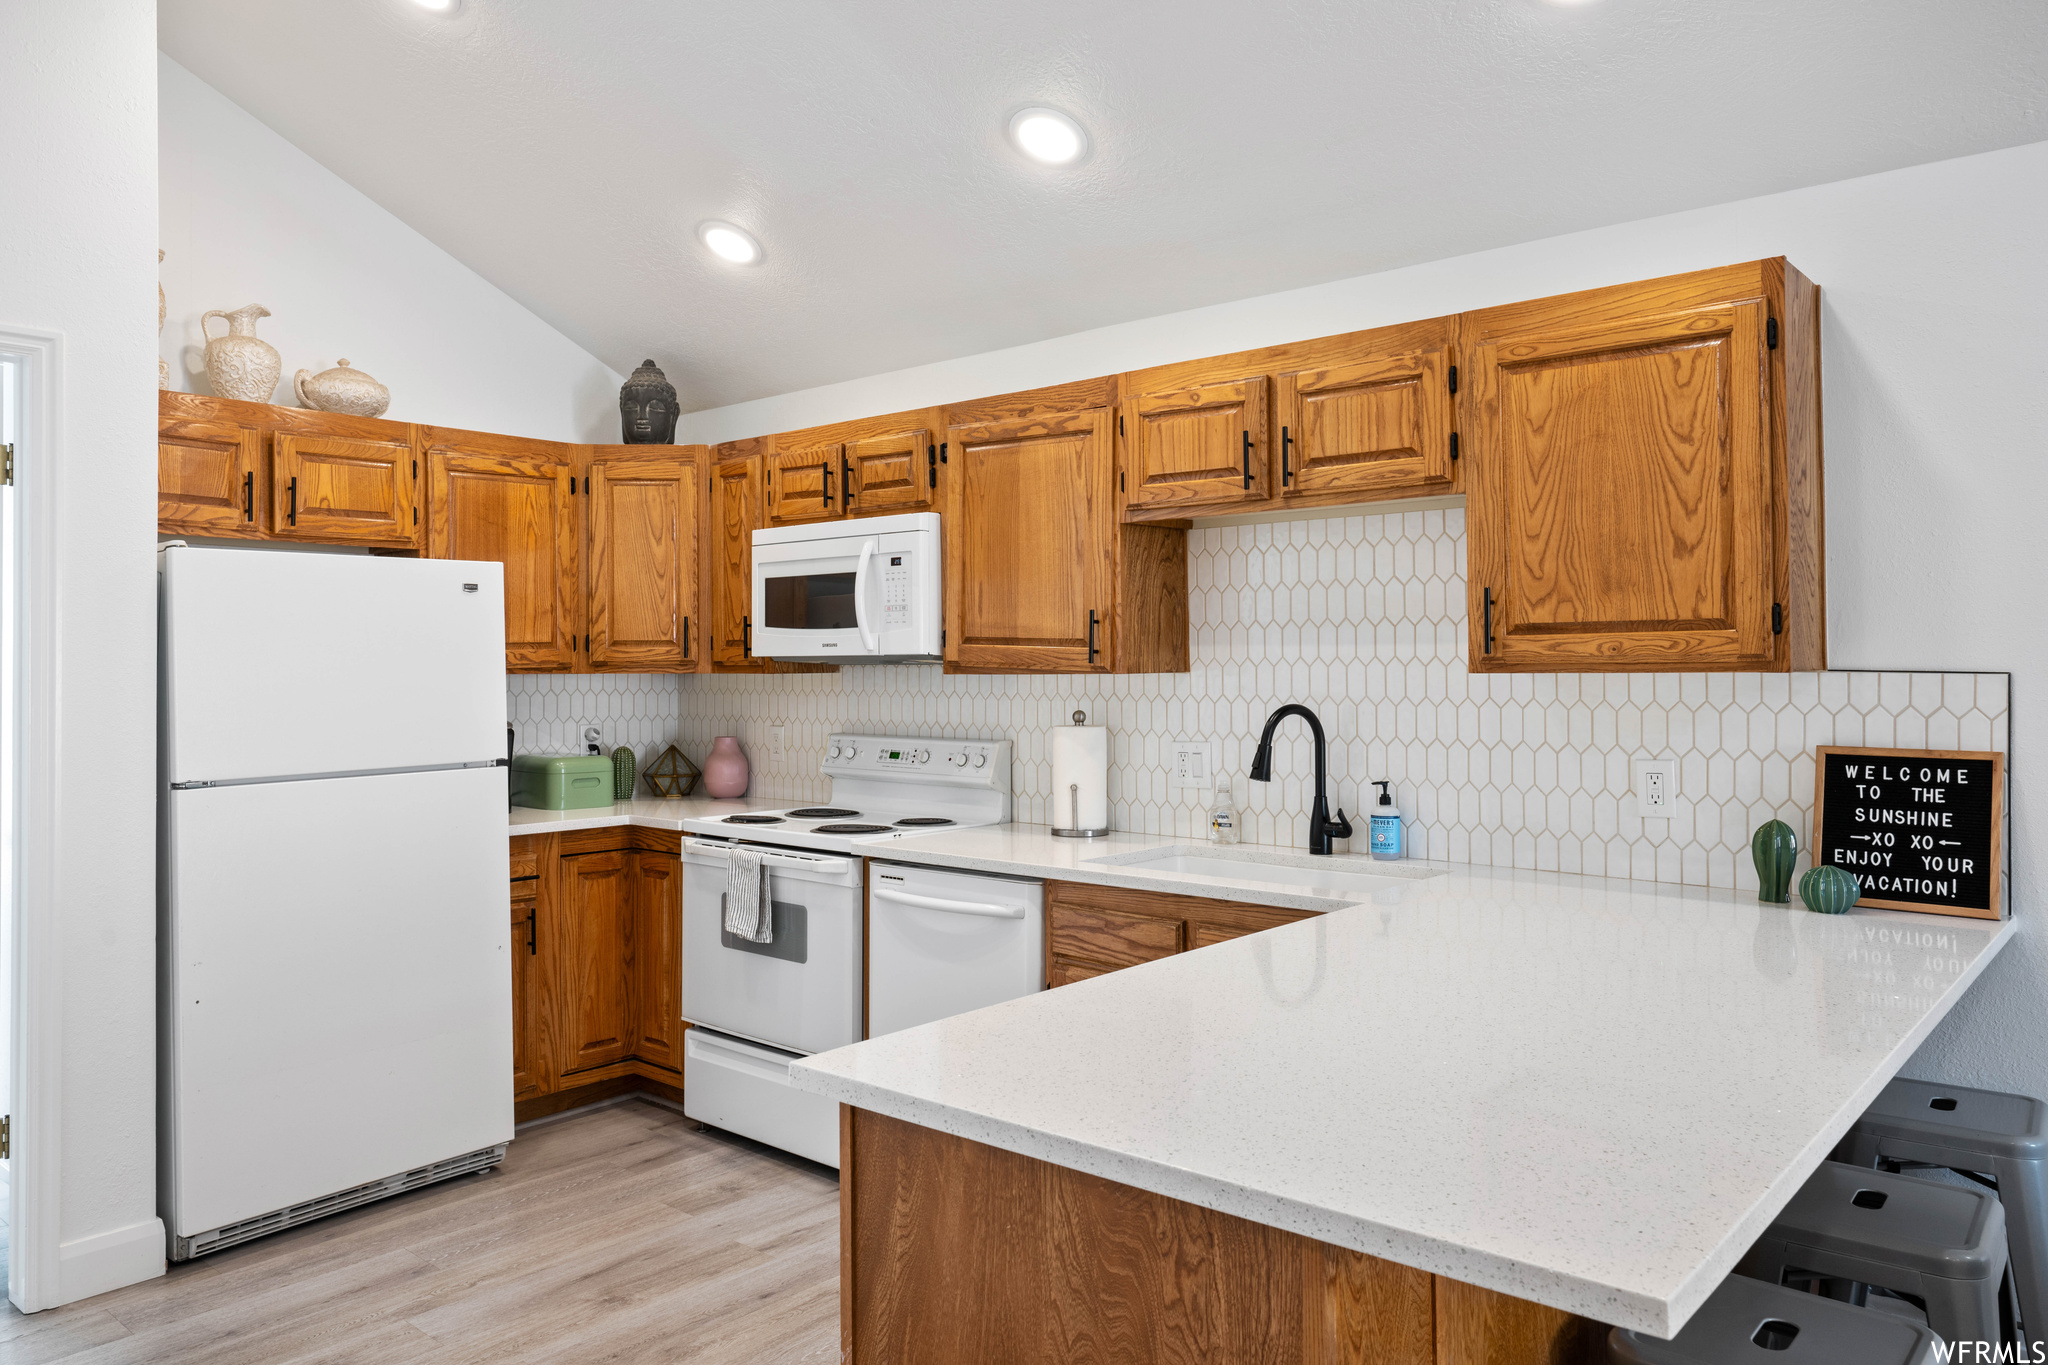 Kitchen featuring lofted ceiling, tasteful backsplash, white appliances, light hardwood / wood-style flooring, and kitchen peninsula